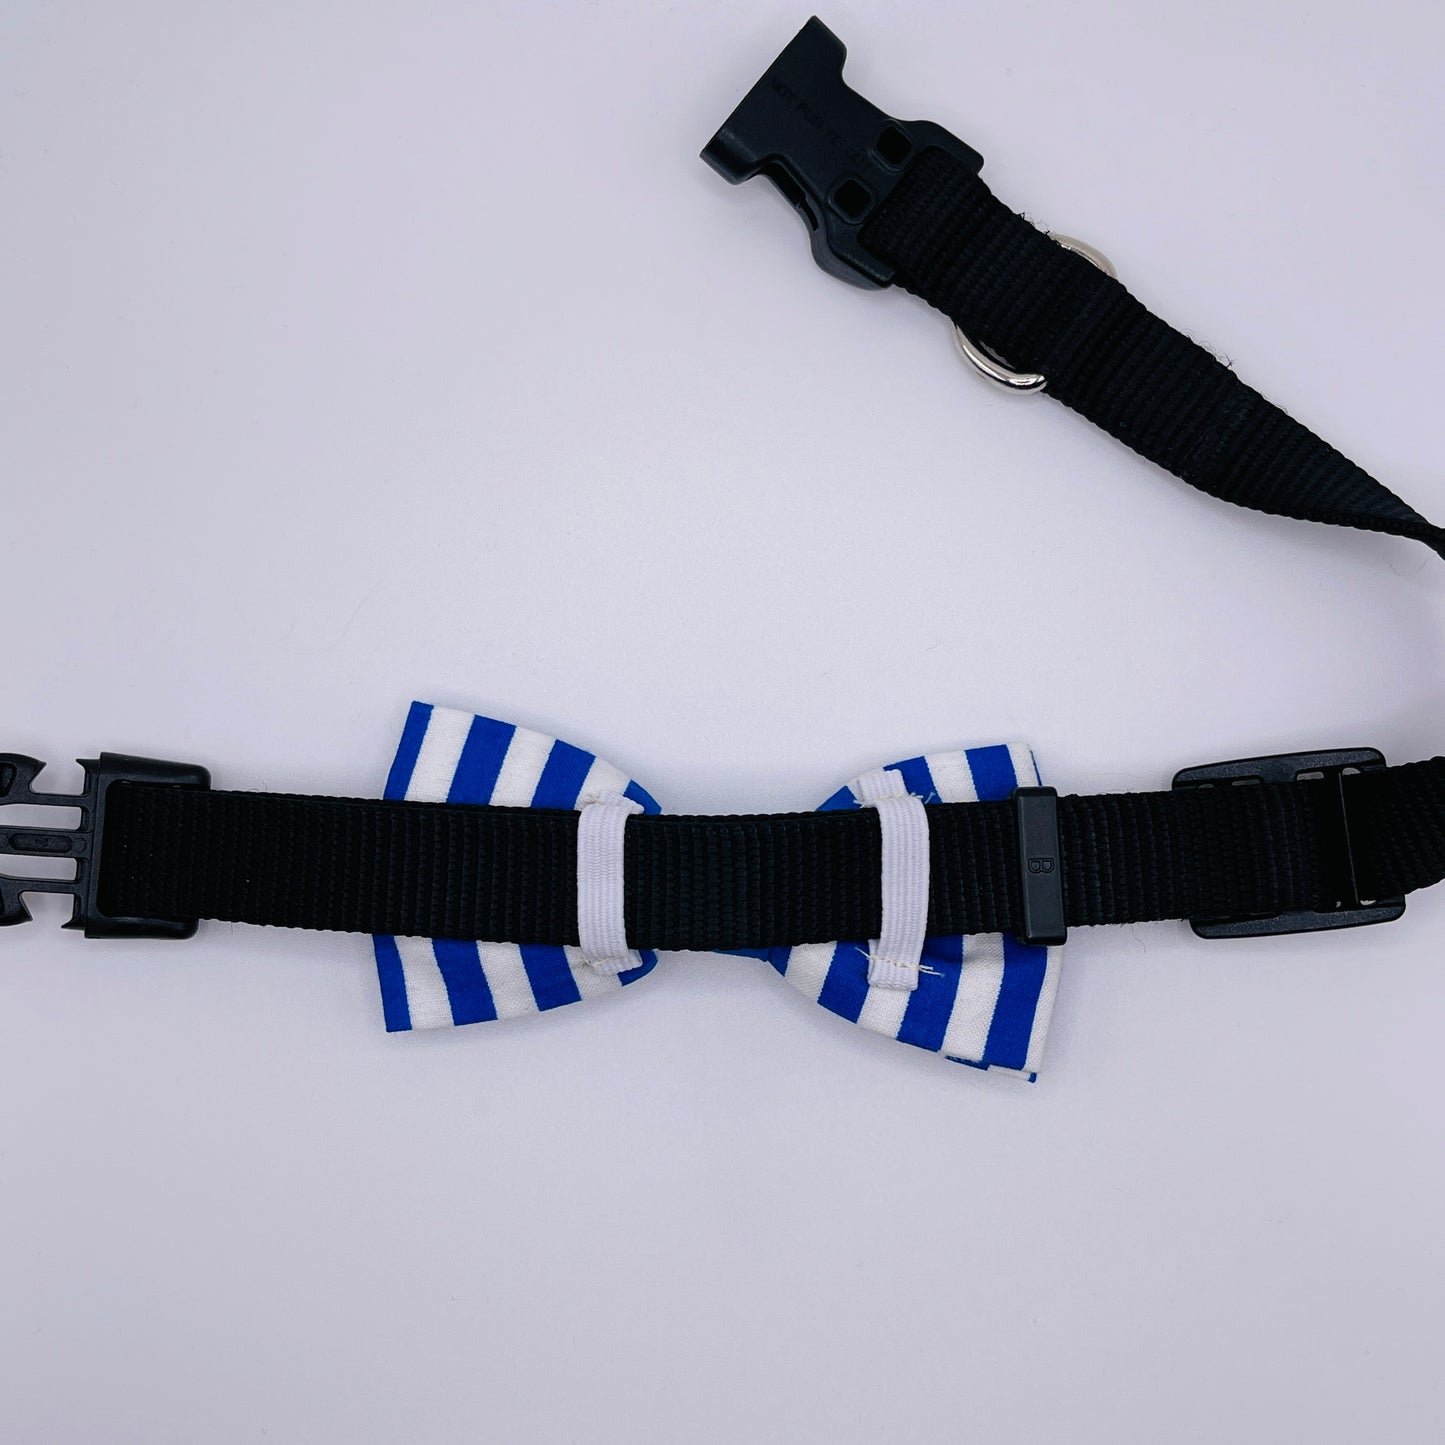 Blue Stripes Bow Tie